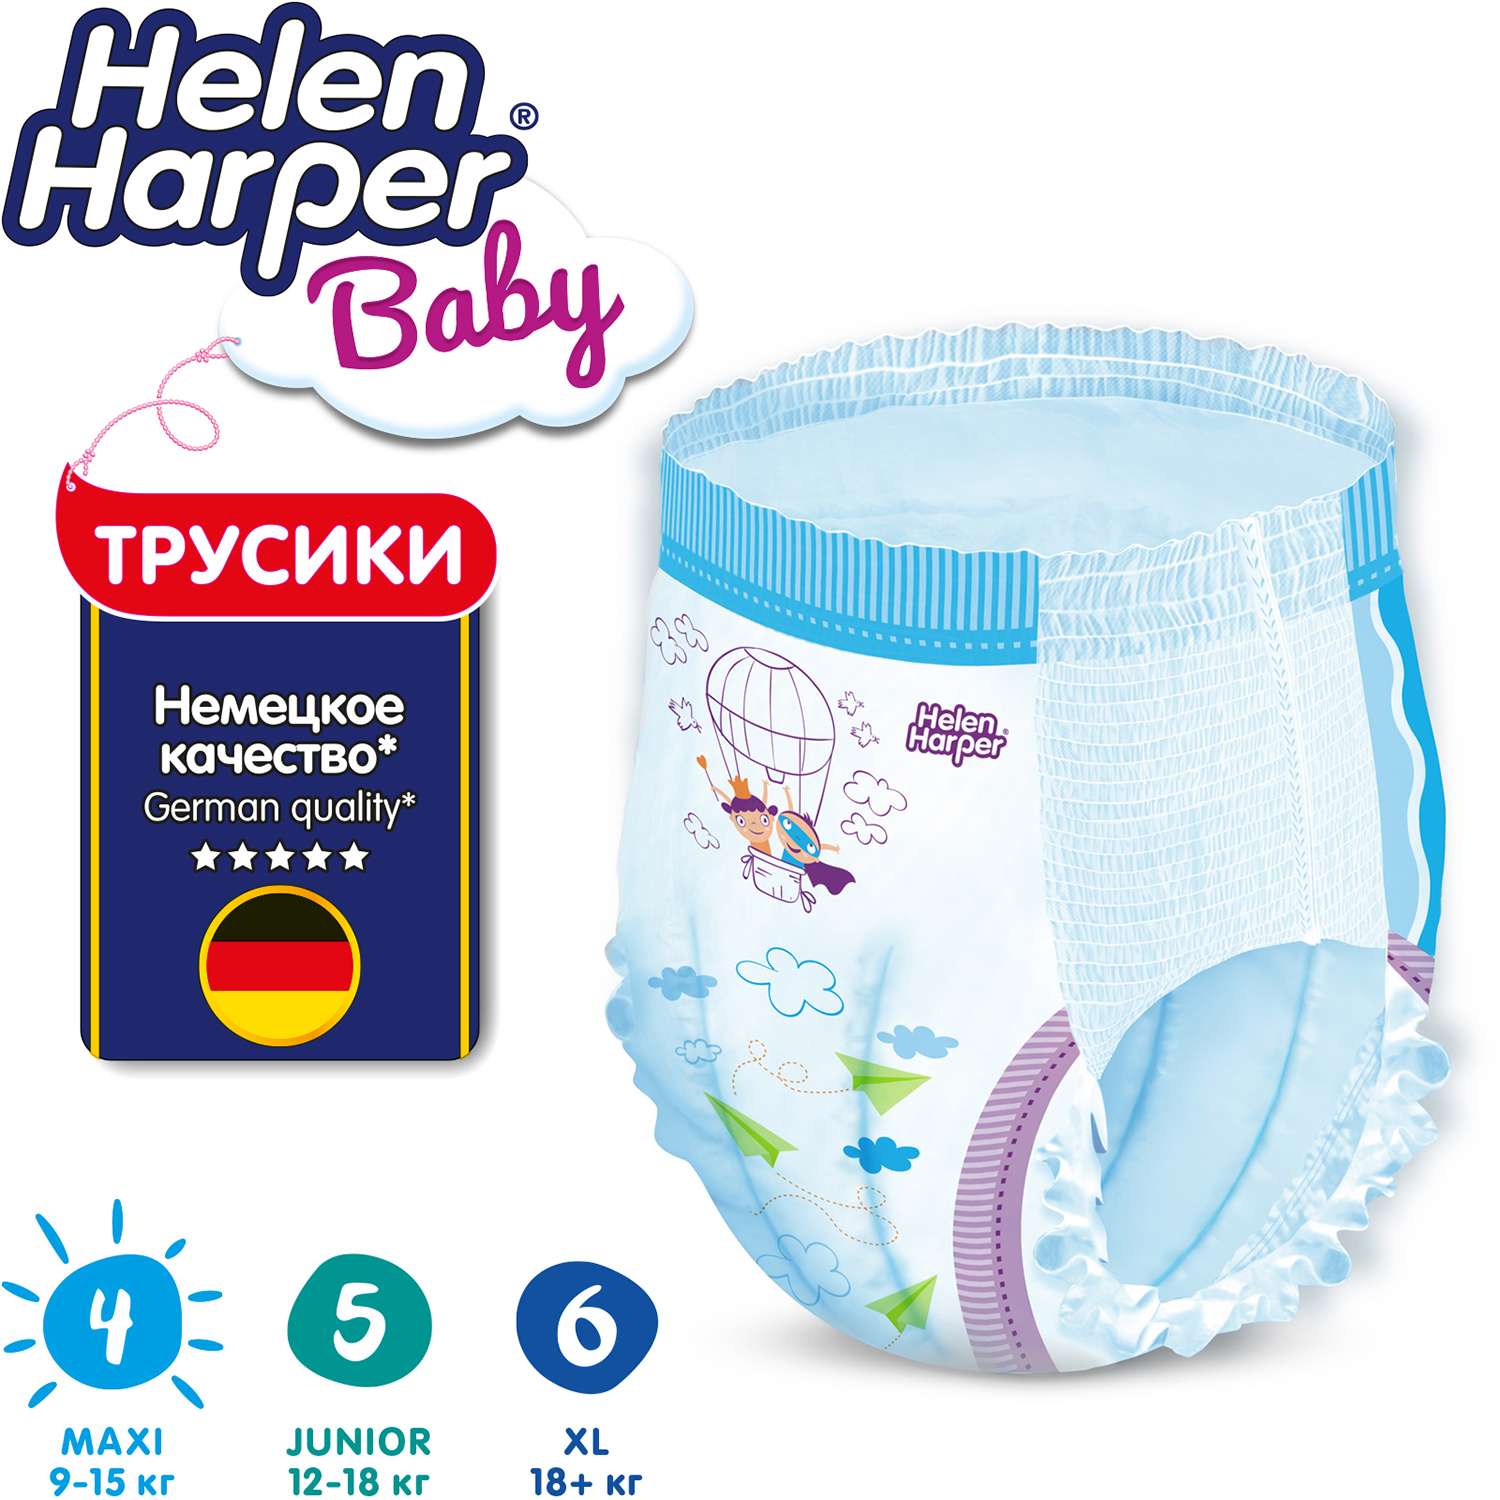 Трусики-подгузники Helen Harper Baby 4 Maxi 9-15 кг 44 шт. - фото 4